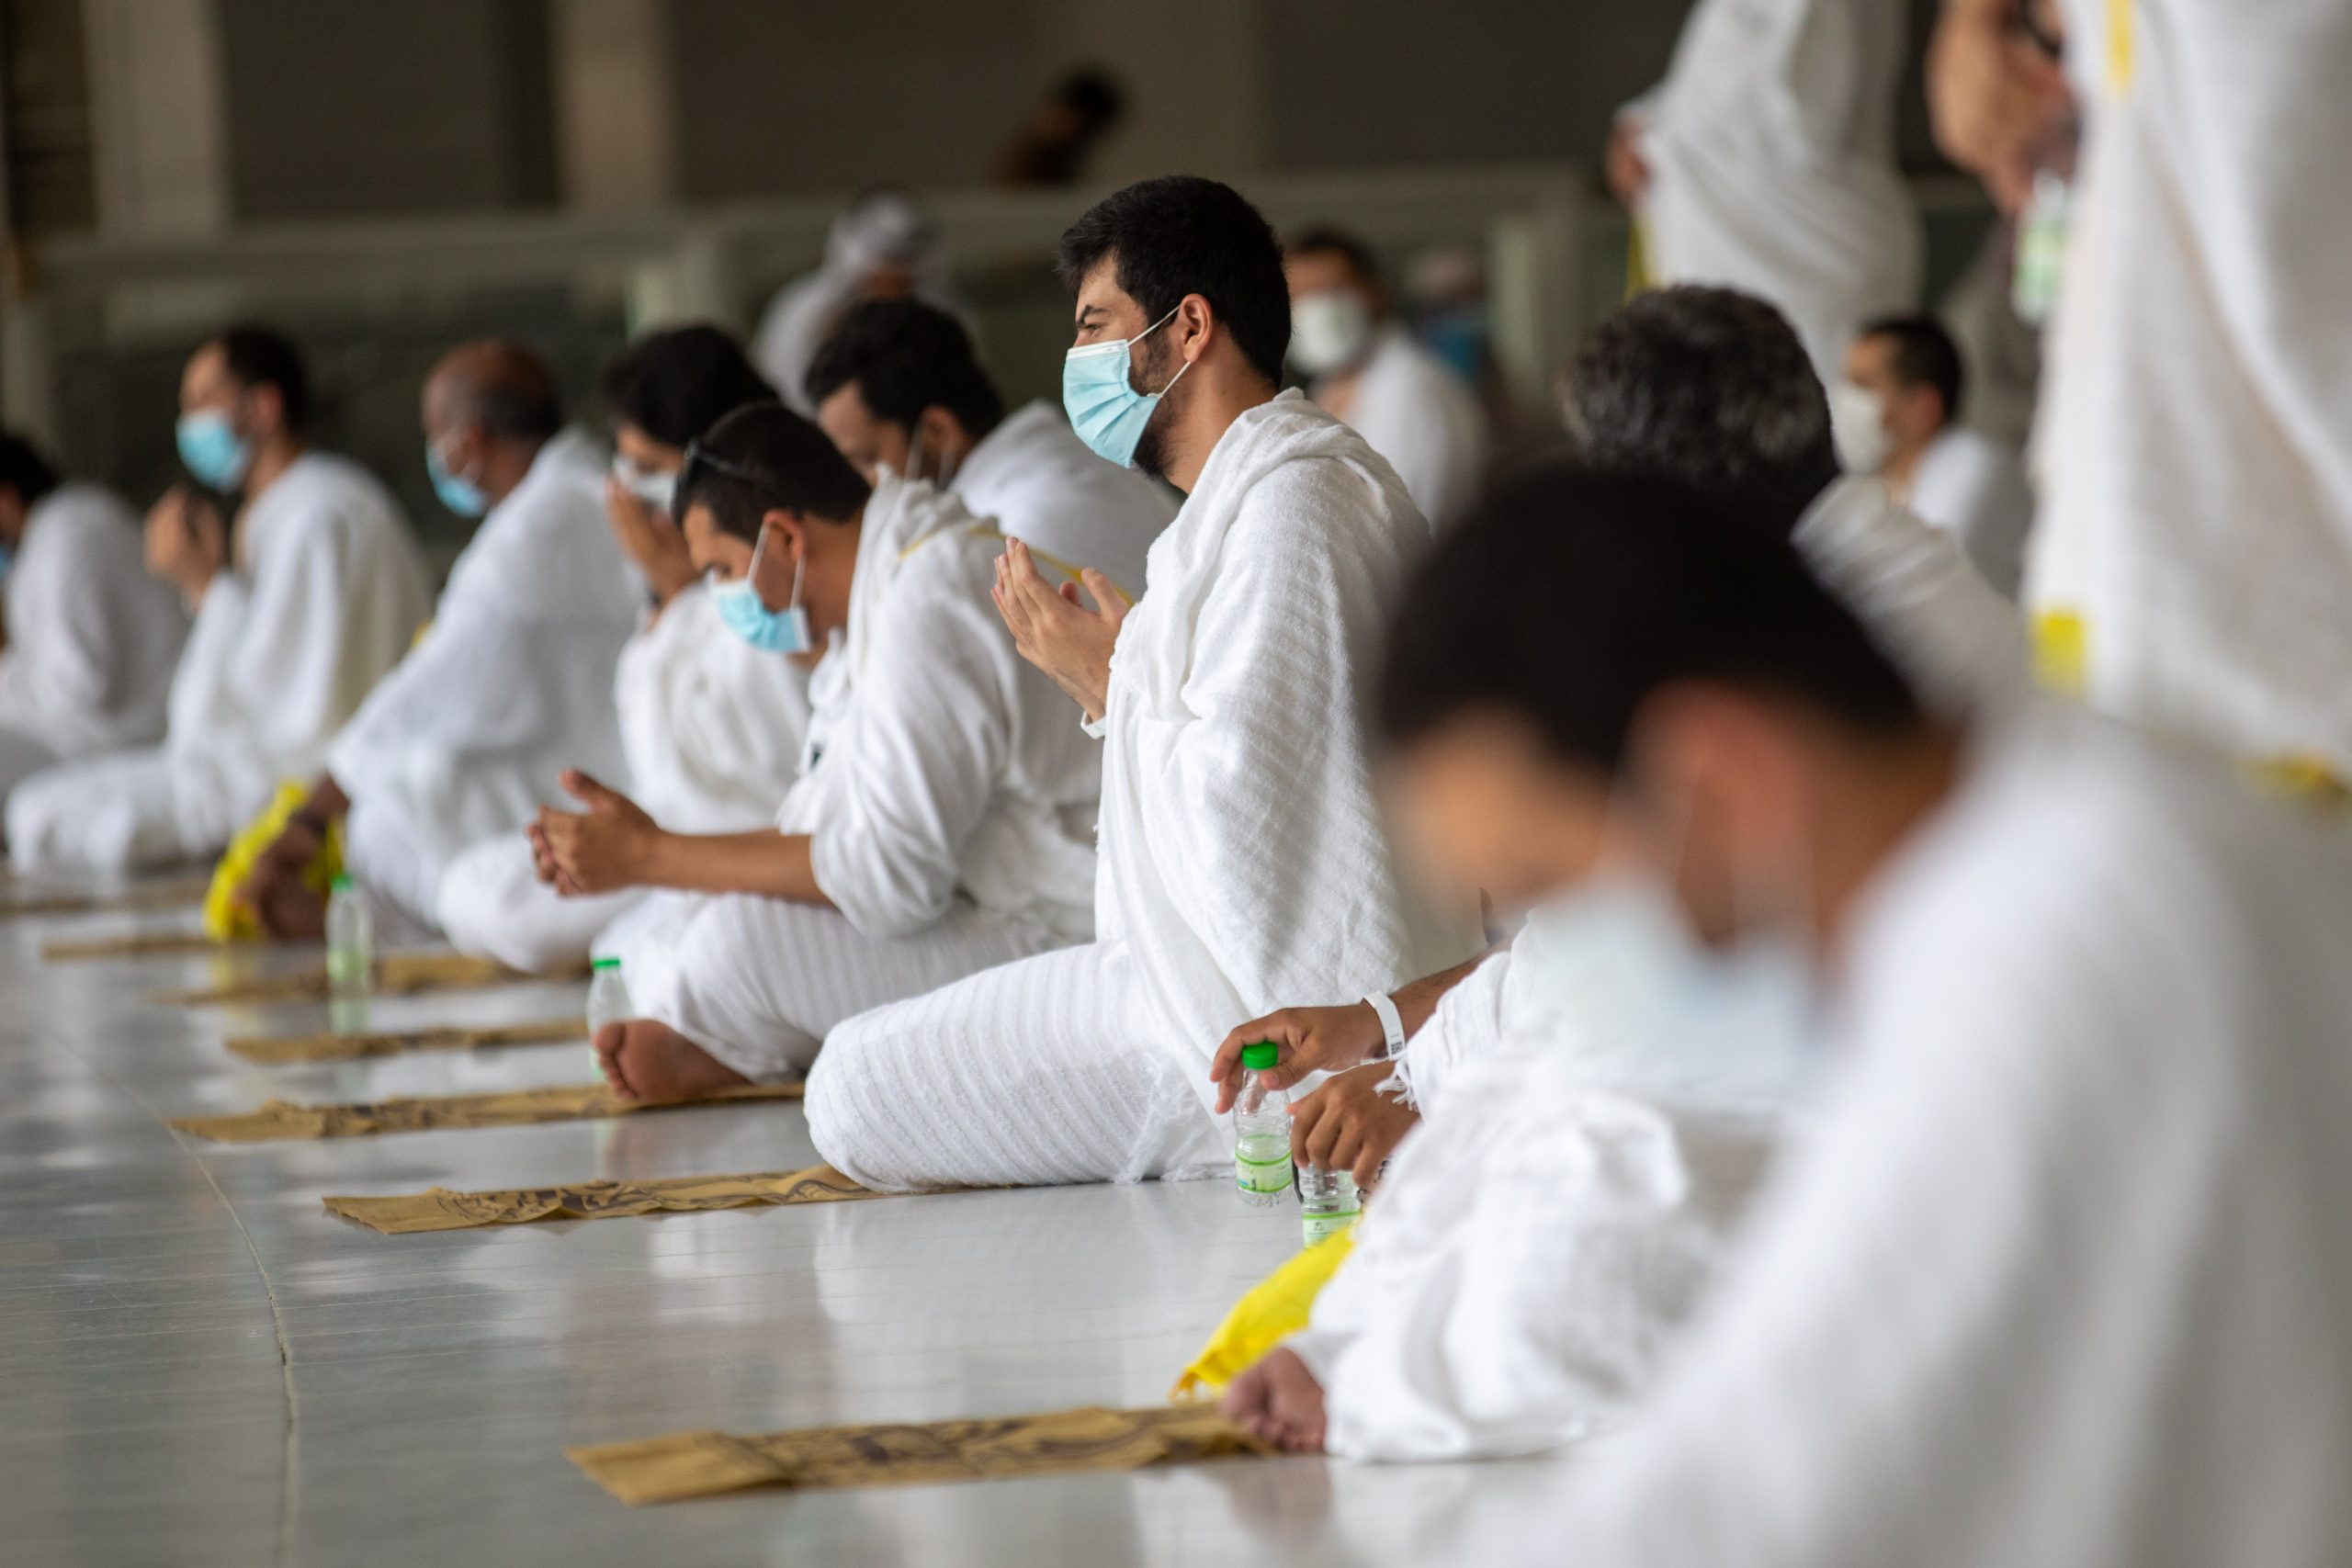 Hajj1442 – Women can register for hajj without male guardian